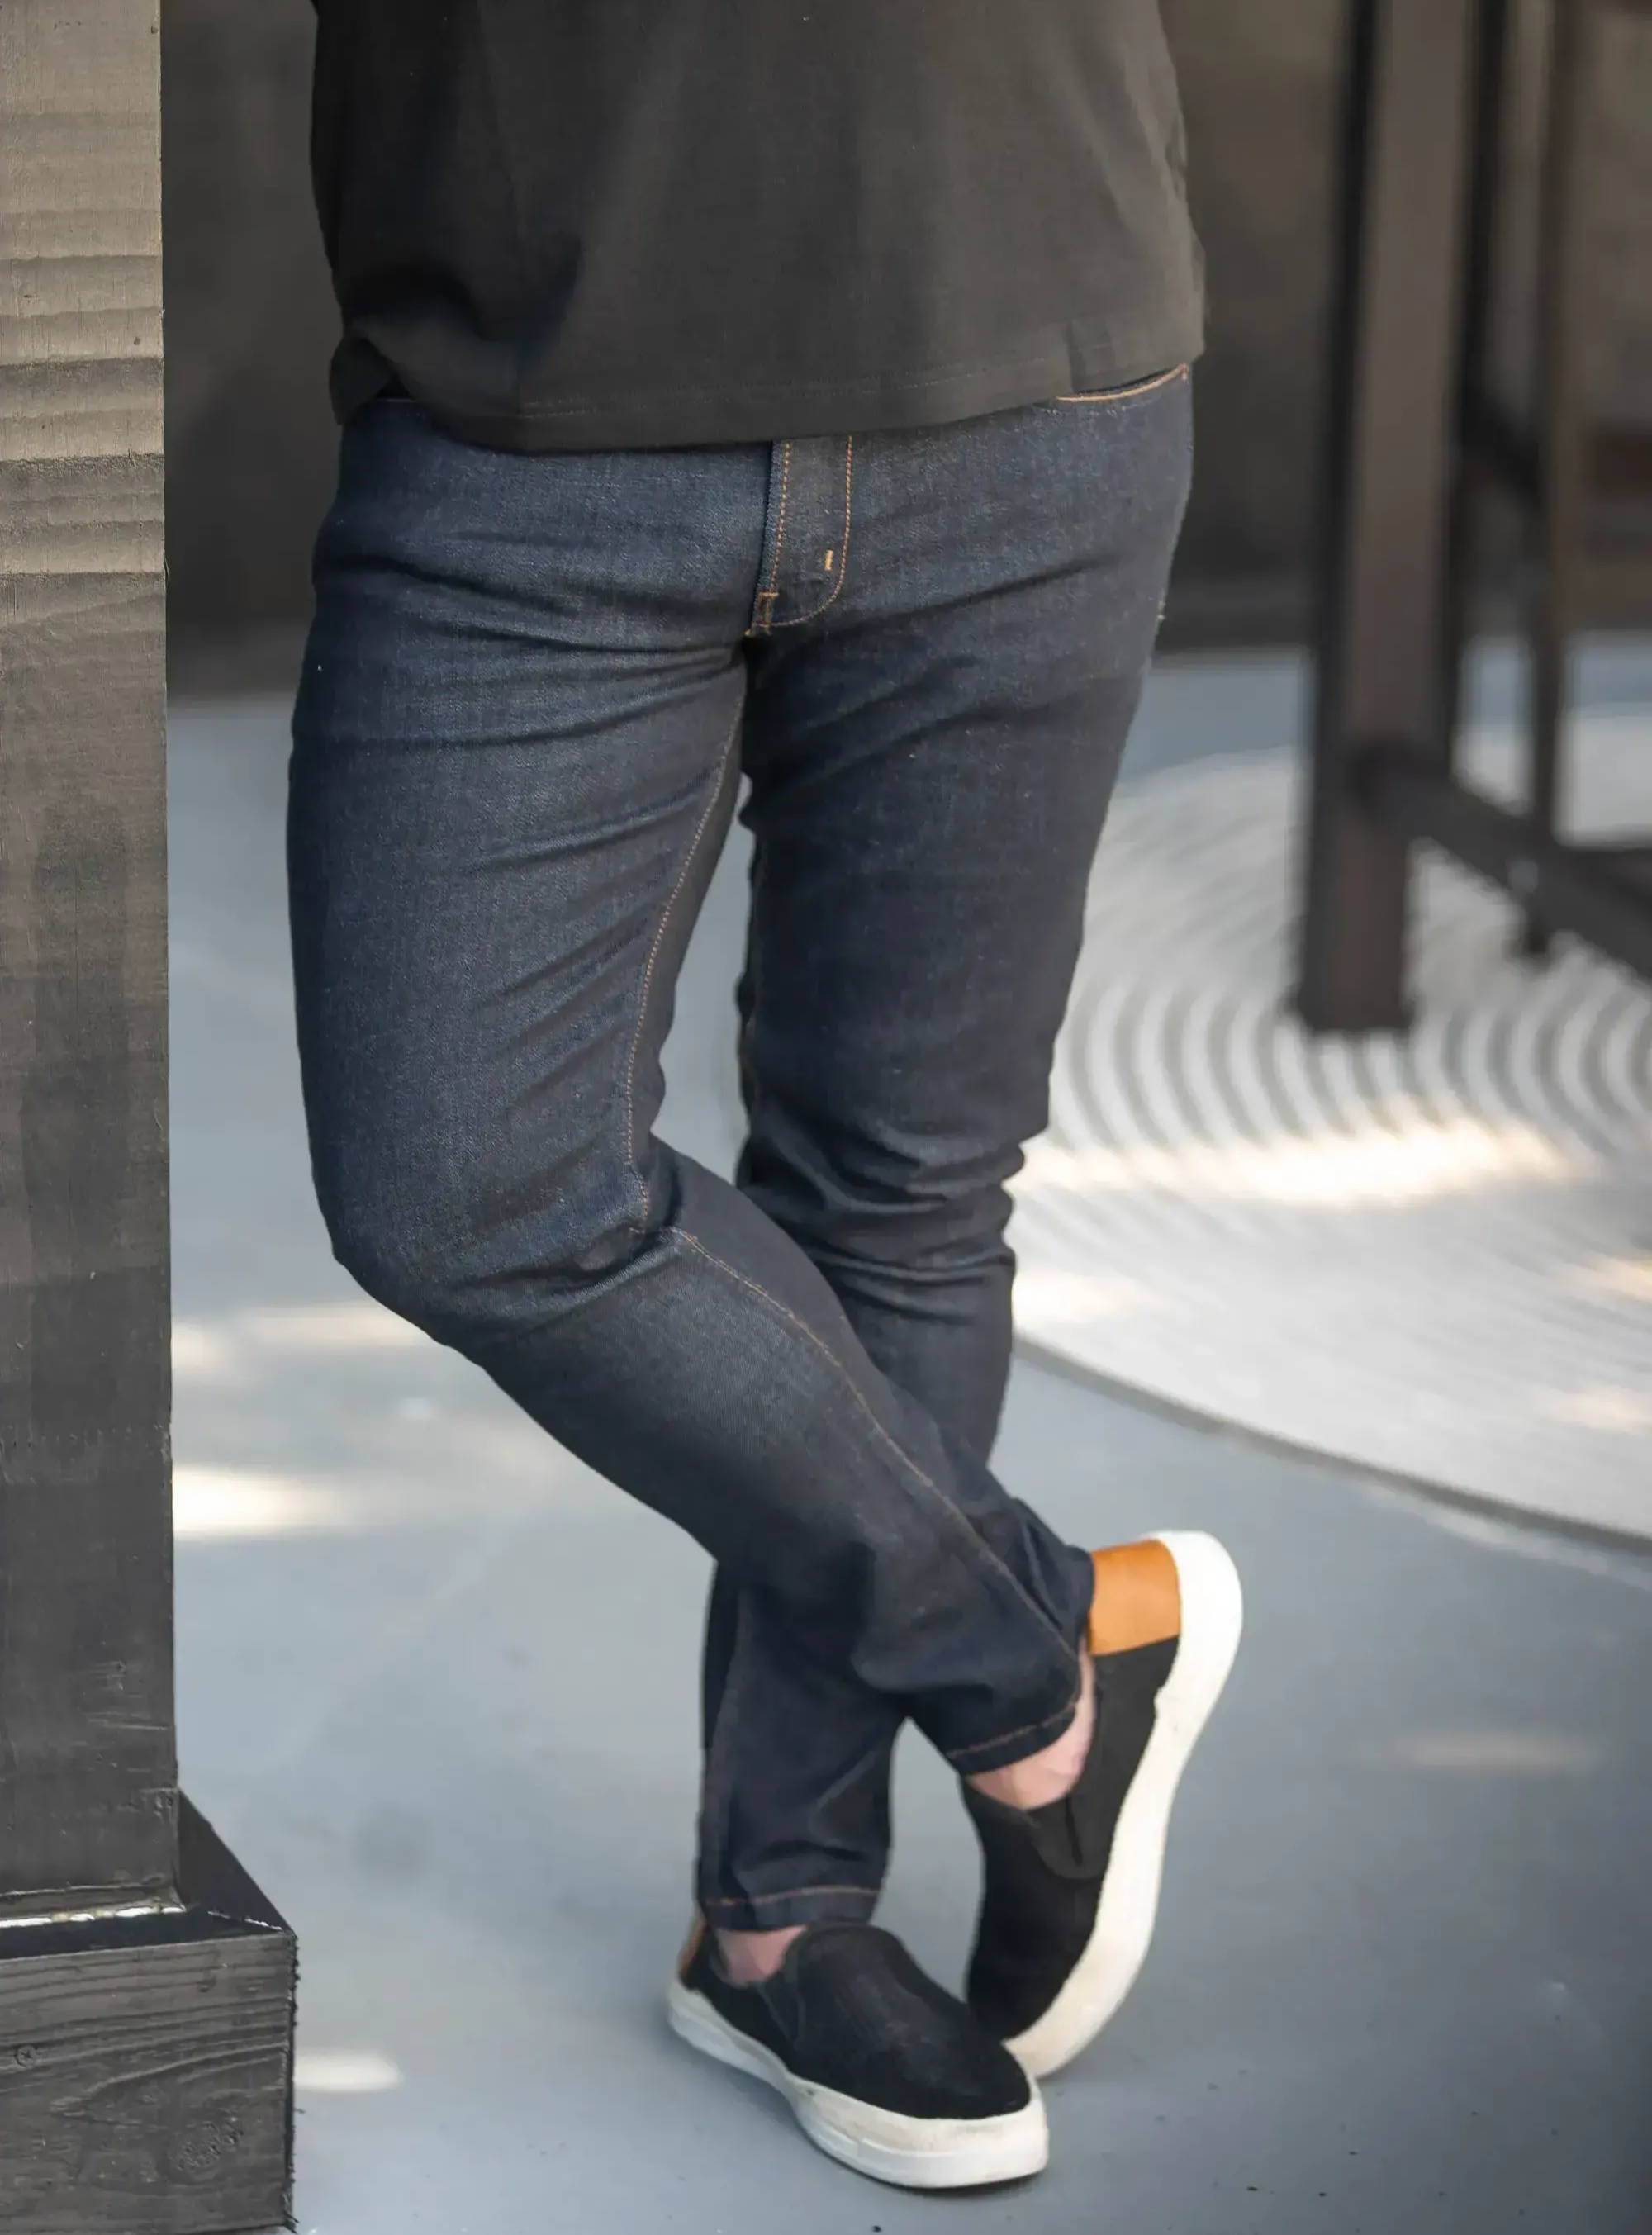 Jeans For Short Men | Slim Fit | Short Inseams – 5'10